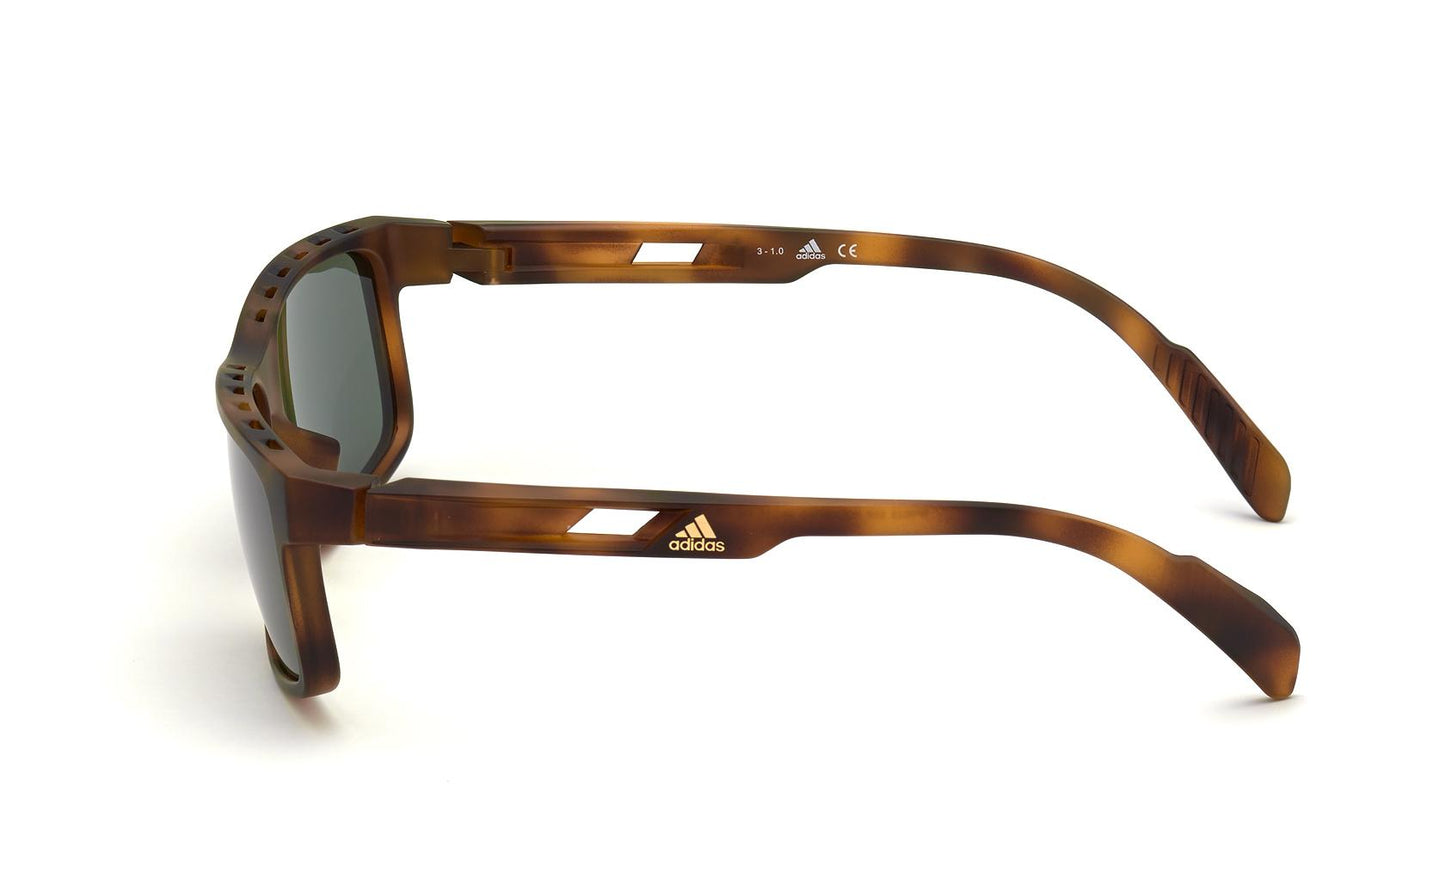 Adidas Sport Sunglasses 52R DARK HAVANA